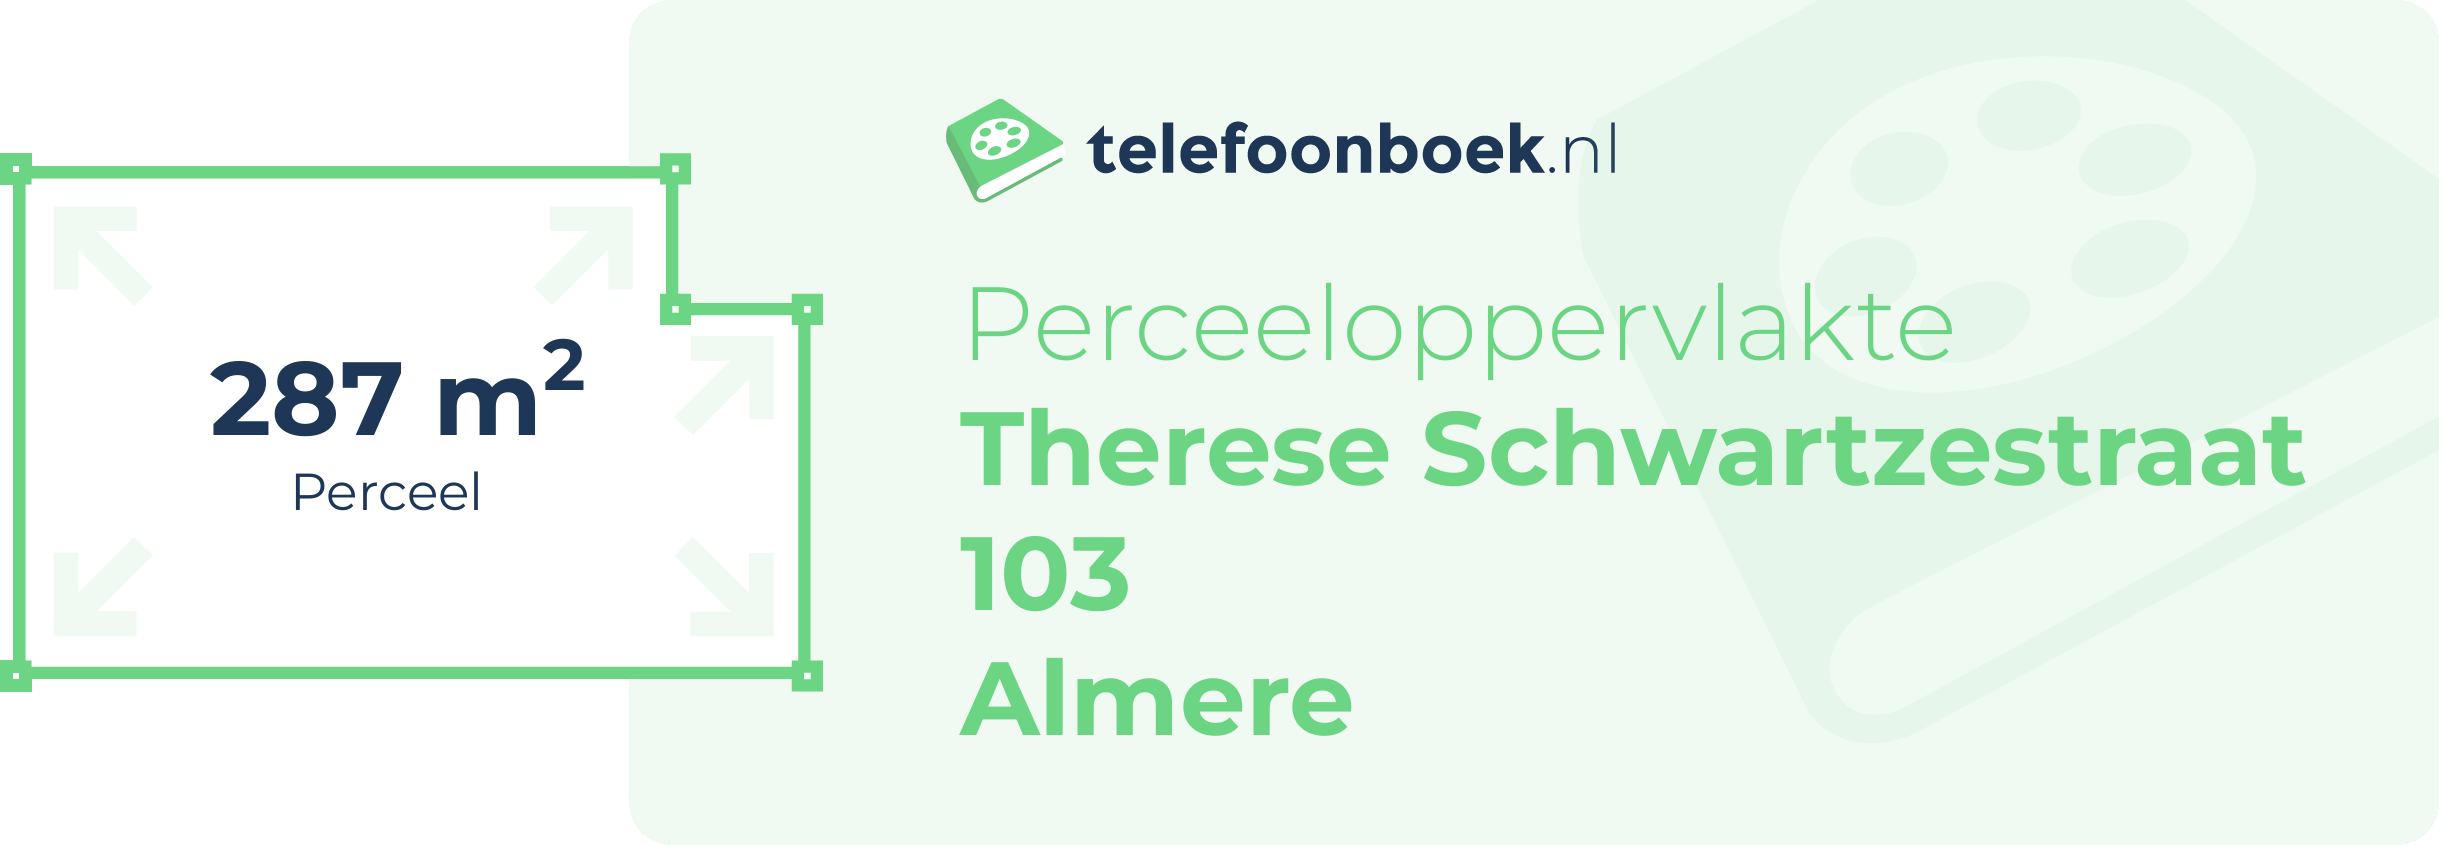 Perceeloppervlakte Therese Schwartzestraat 103 Almere